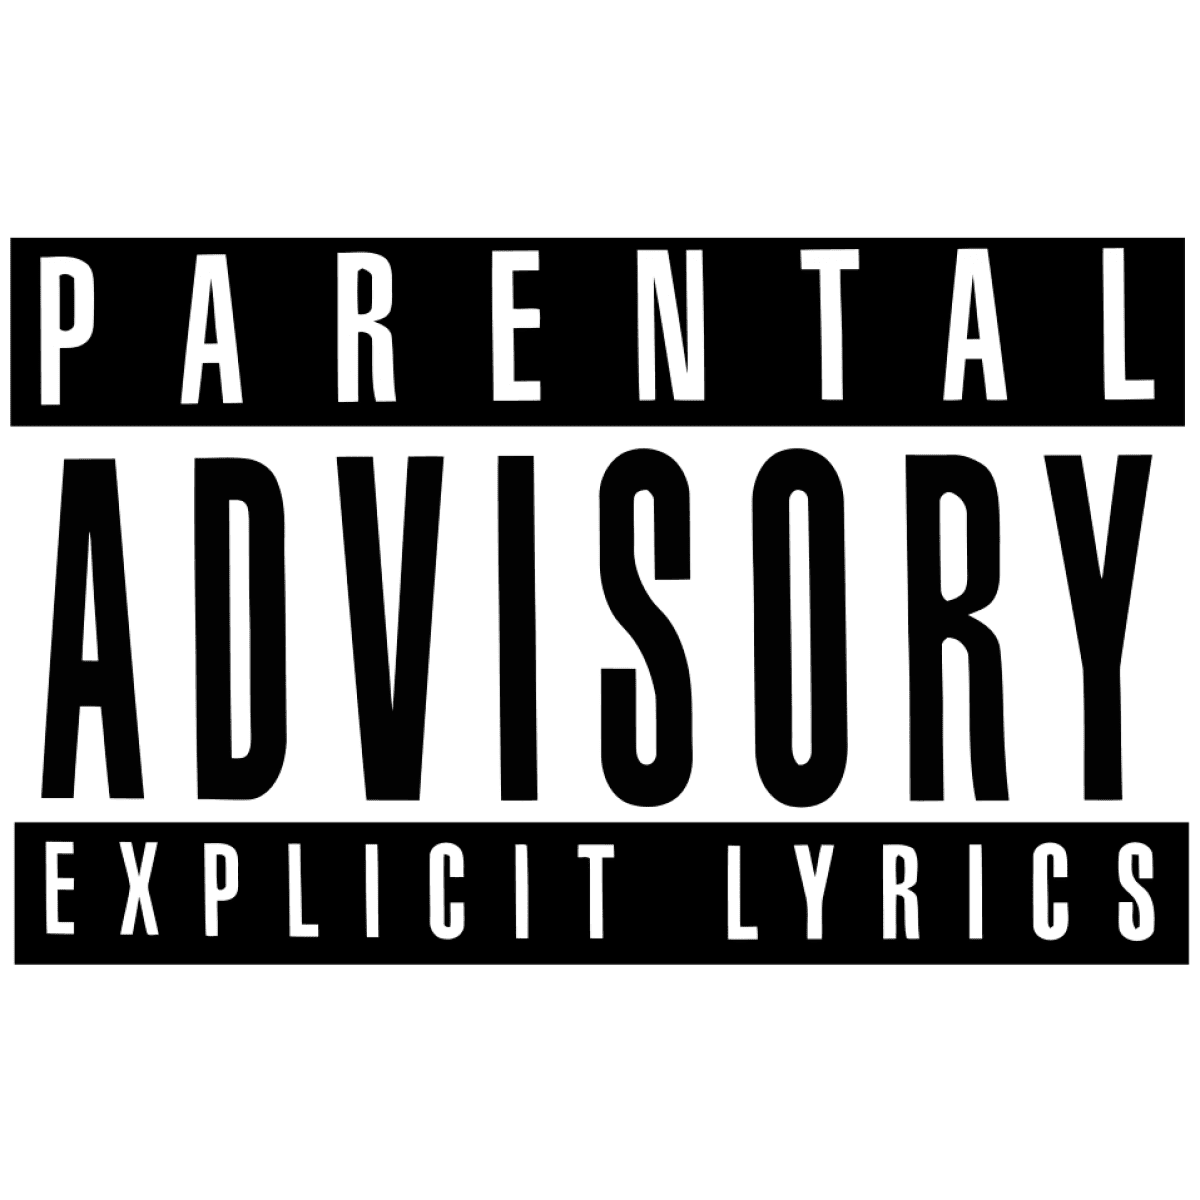 Parental Advisory Logo PNG HD